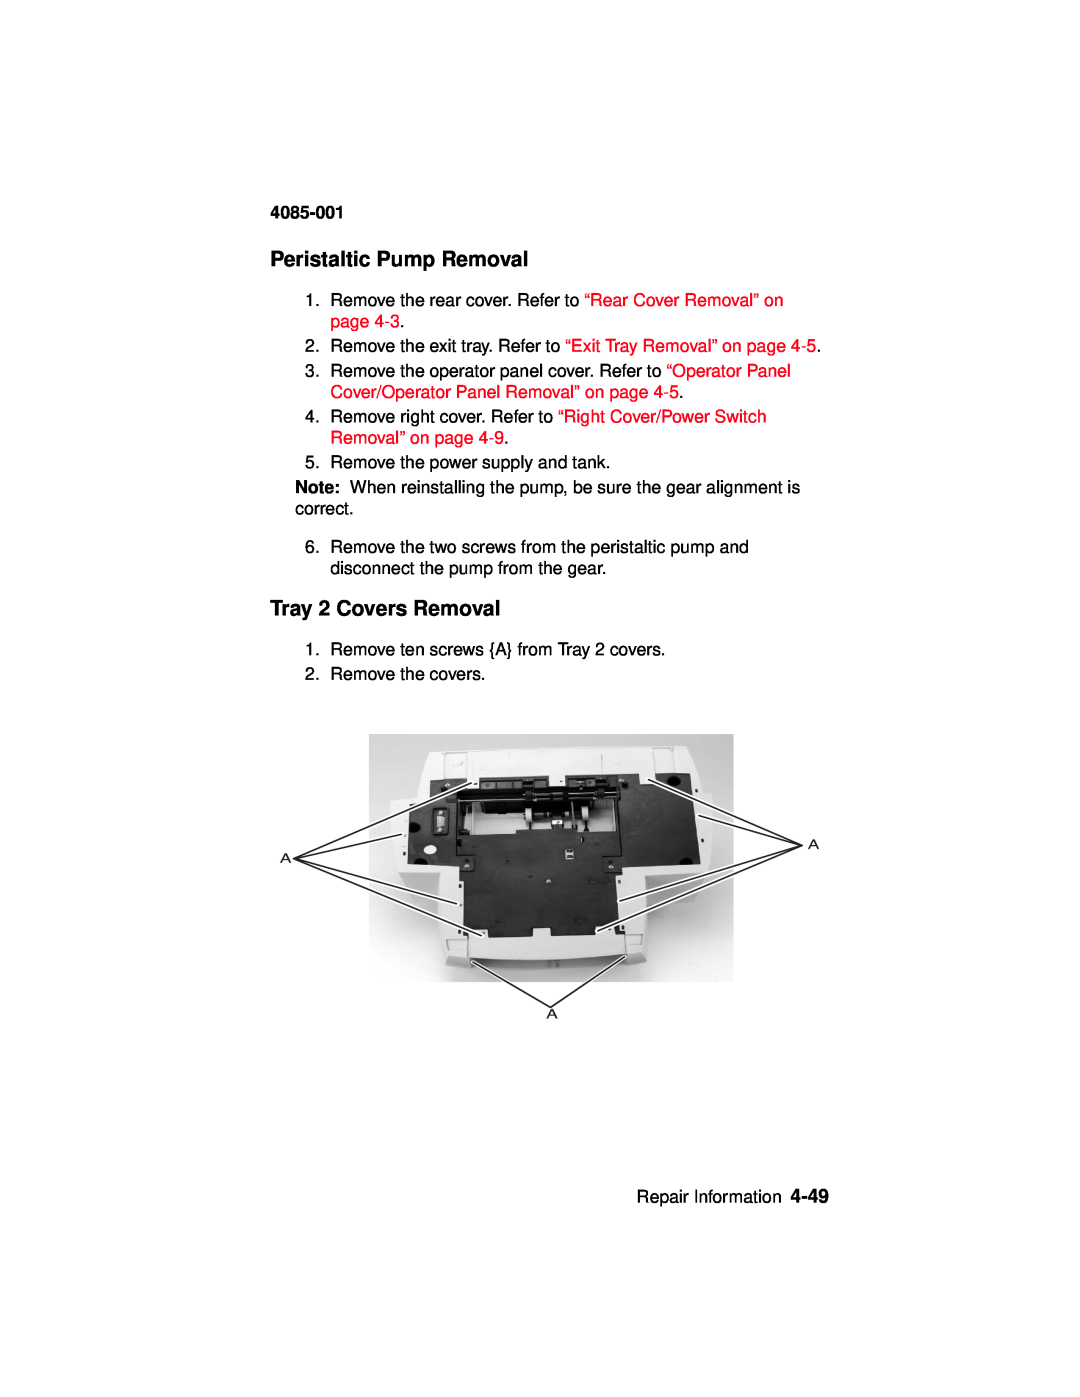 Lexmark Printer, J110 manual Peristaltic Pump Removal, Tray 2 Covers Removal, 4085-001 